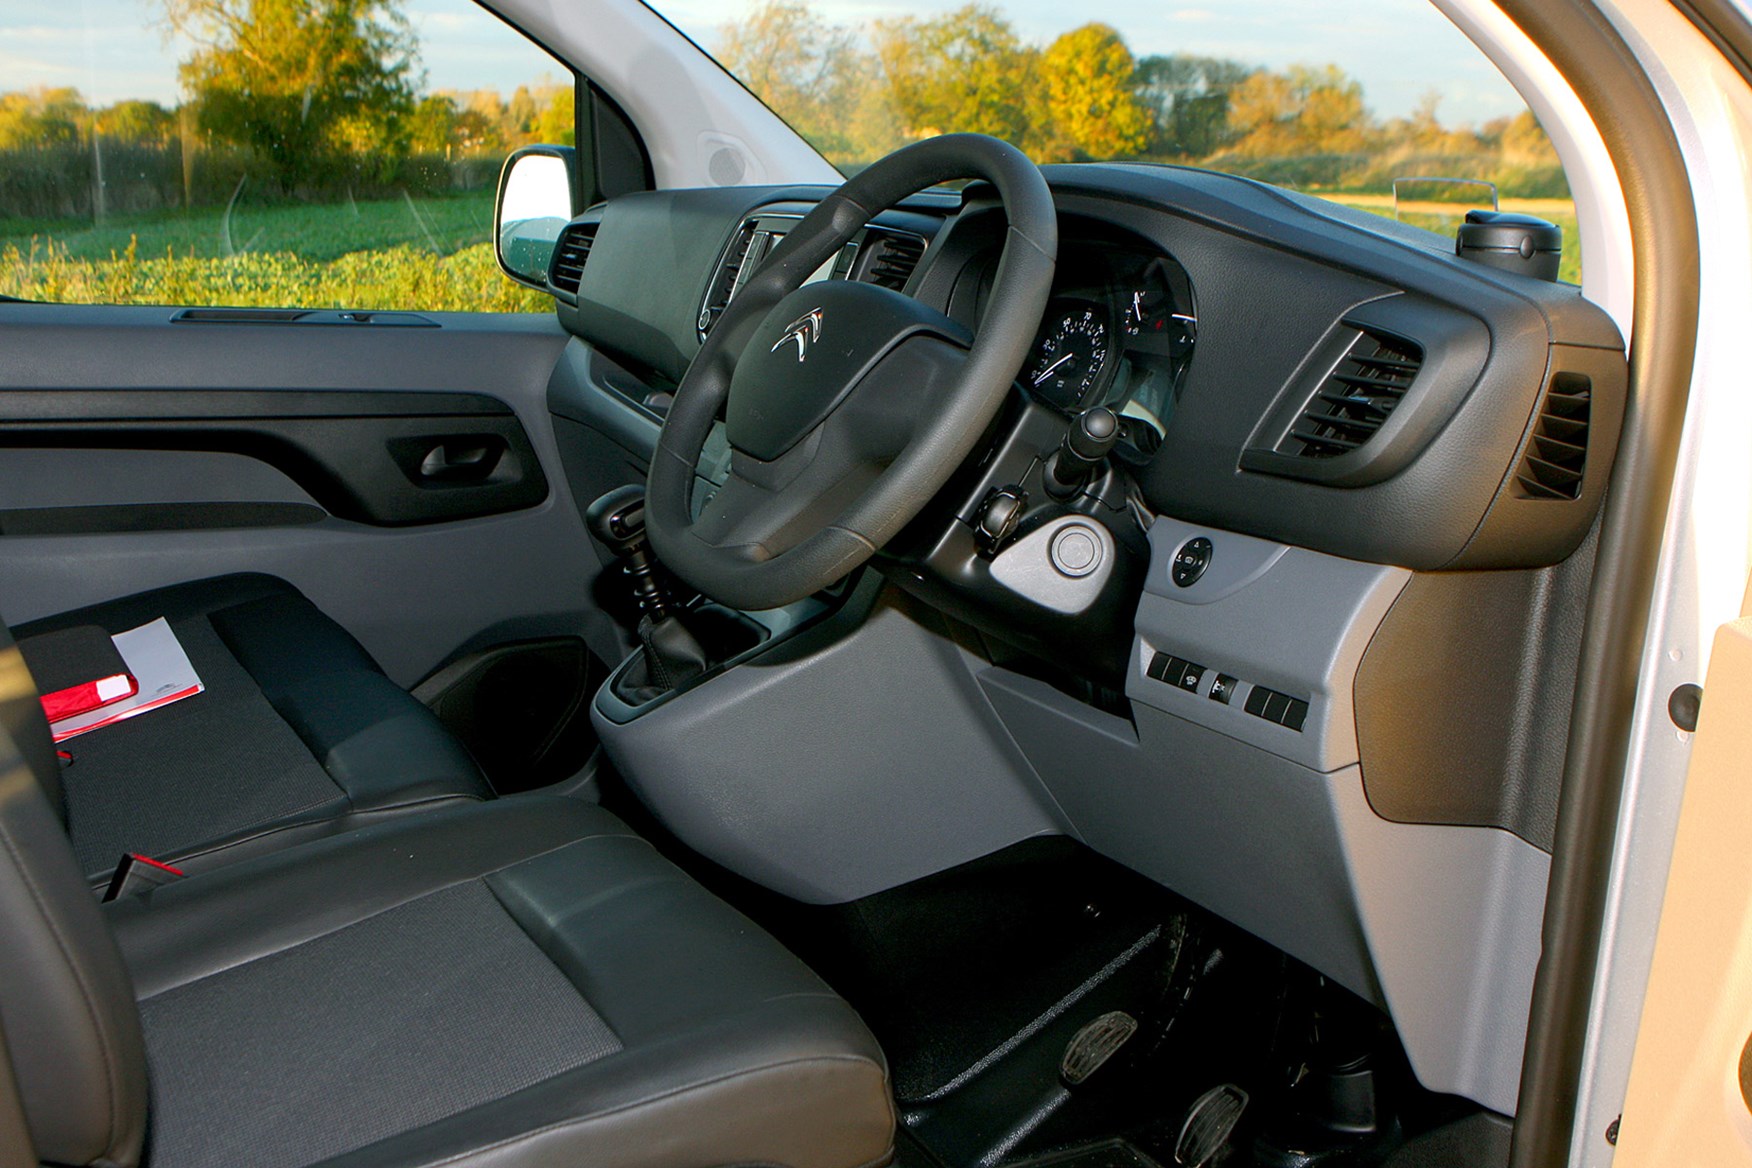 Citroen Dispatch review - cab interior